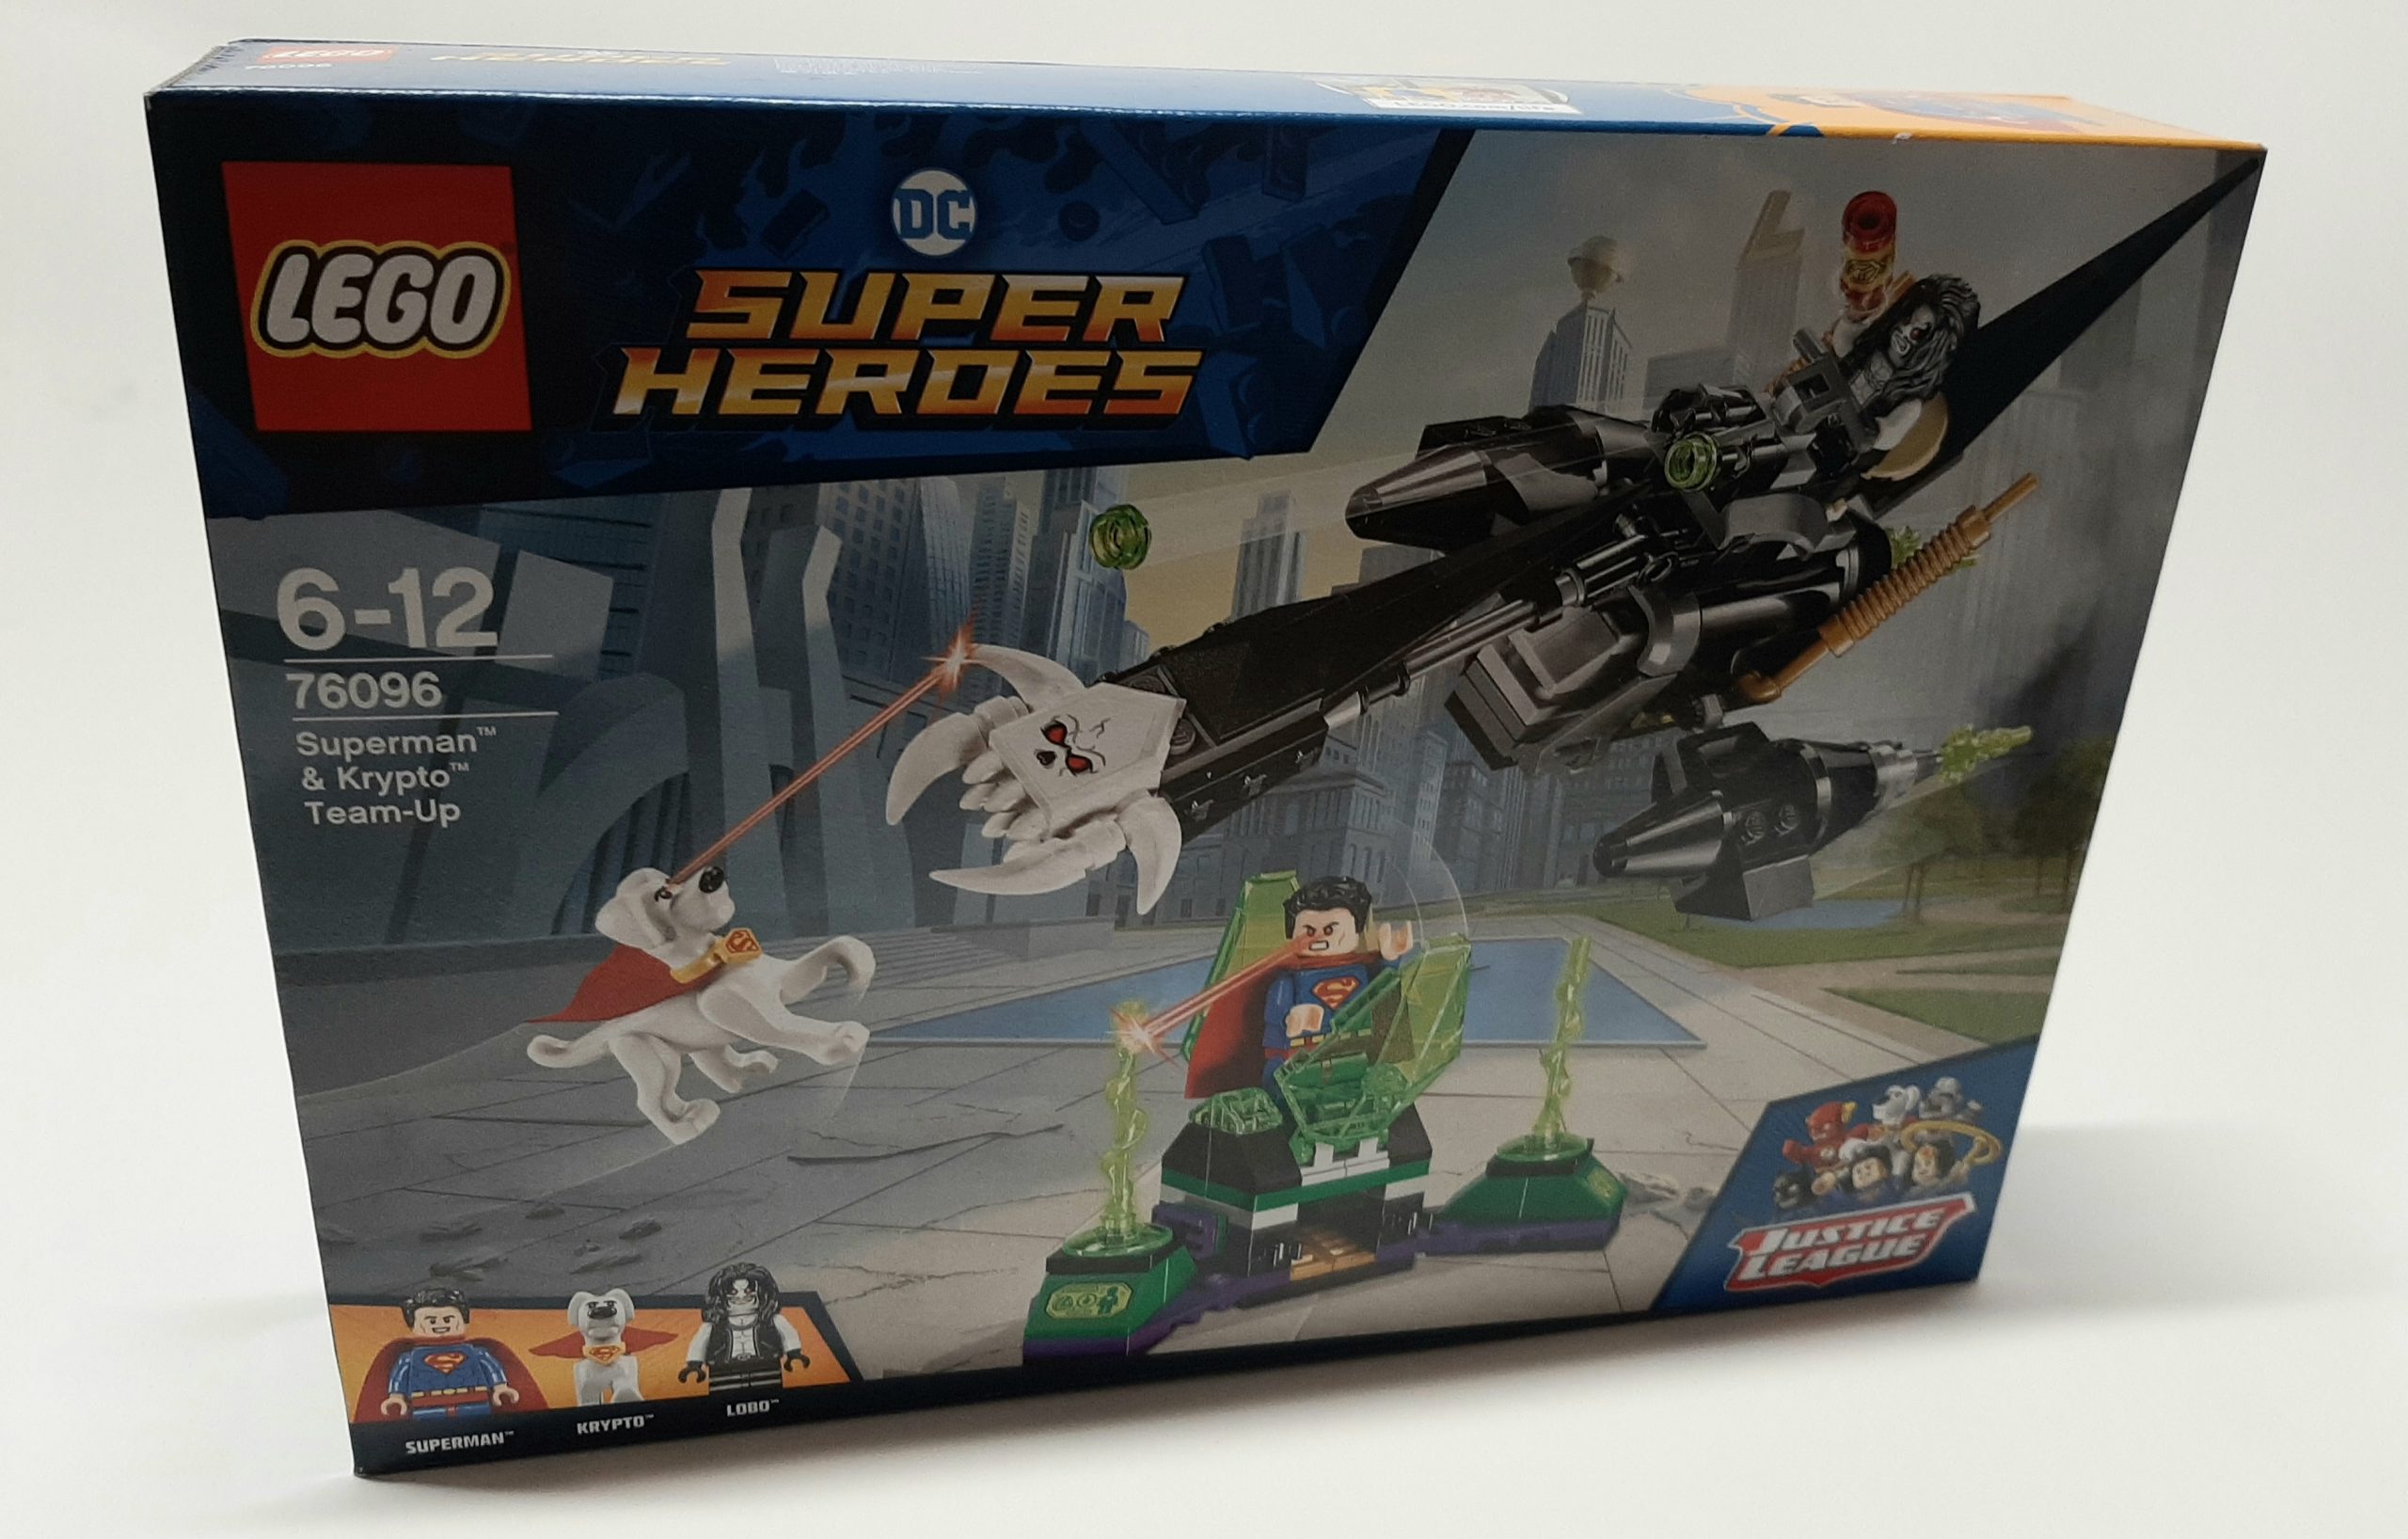 LEGO 76096 – Superman and Krypto team up – The Brick